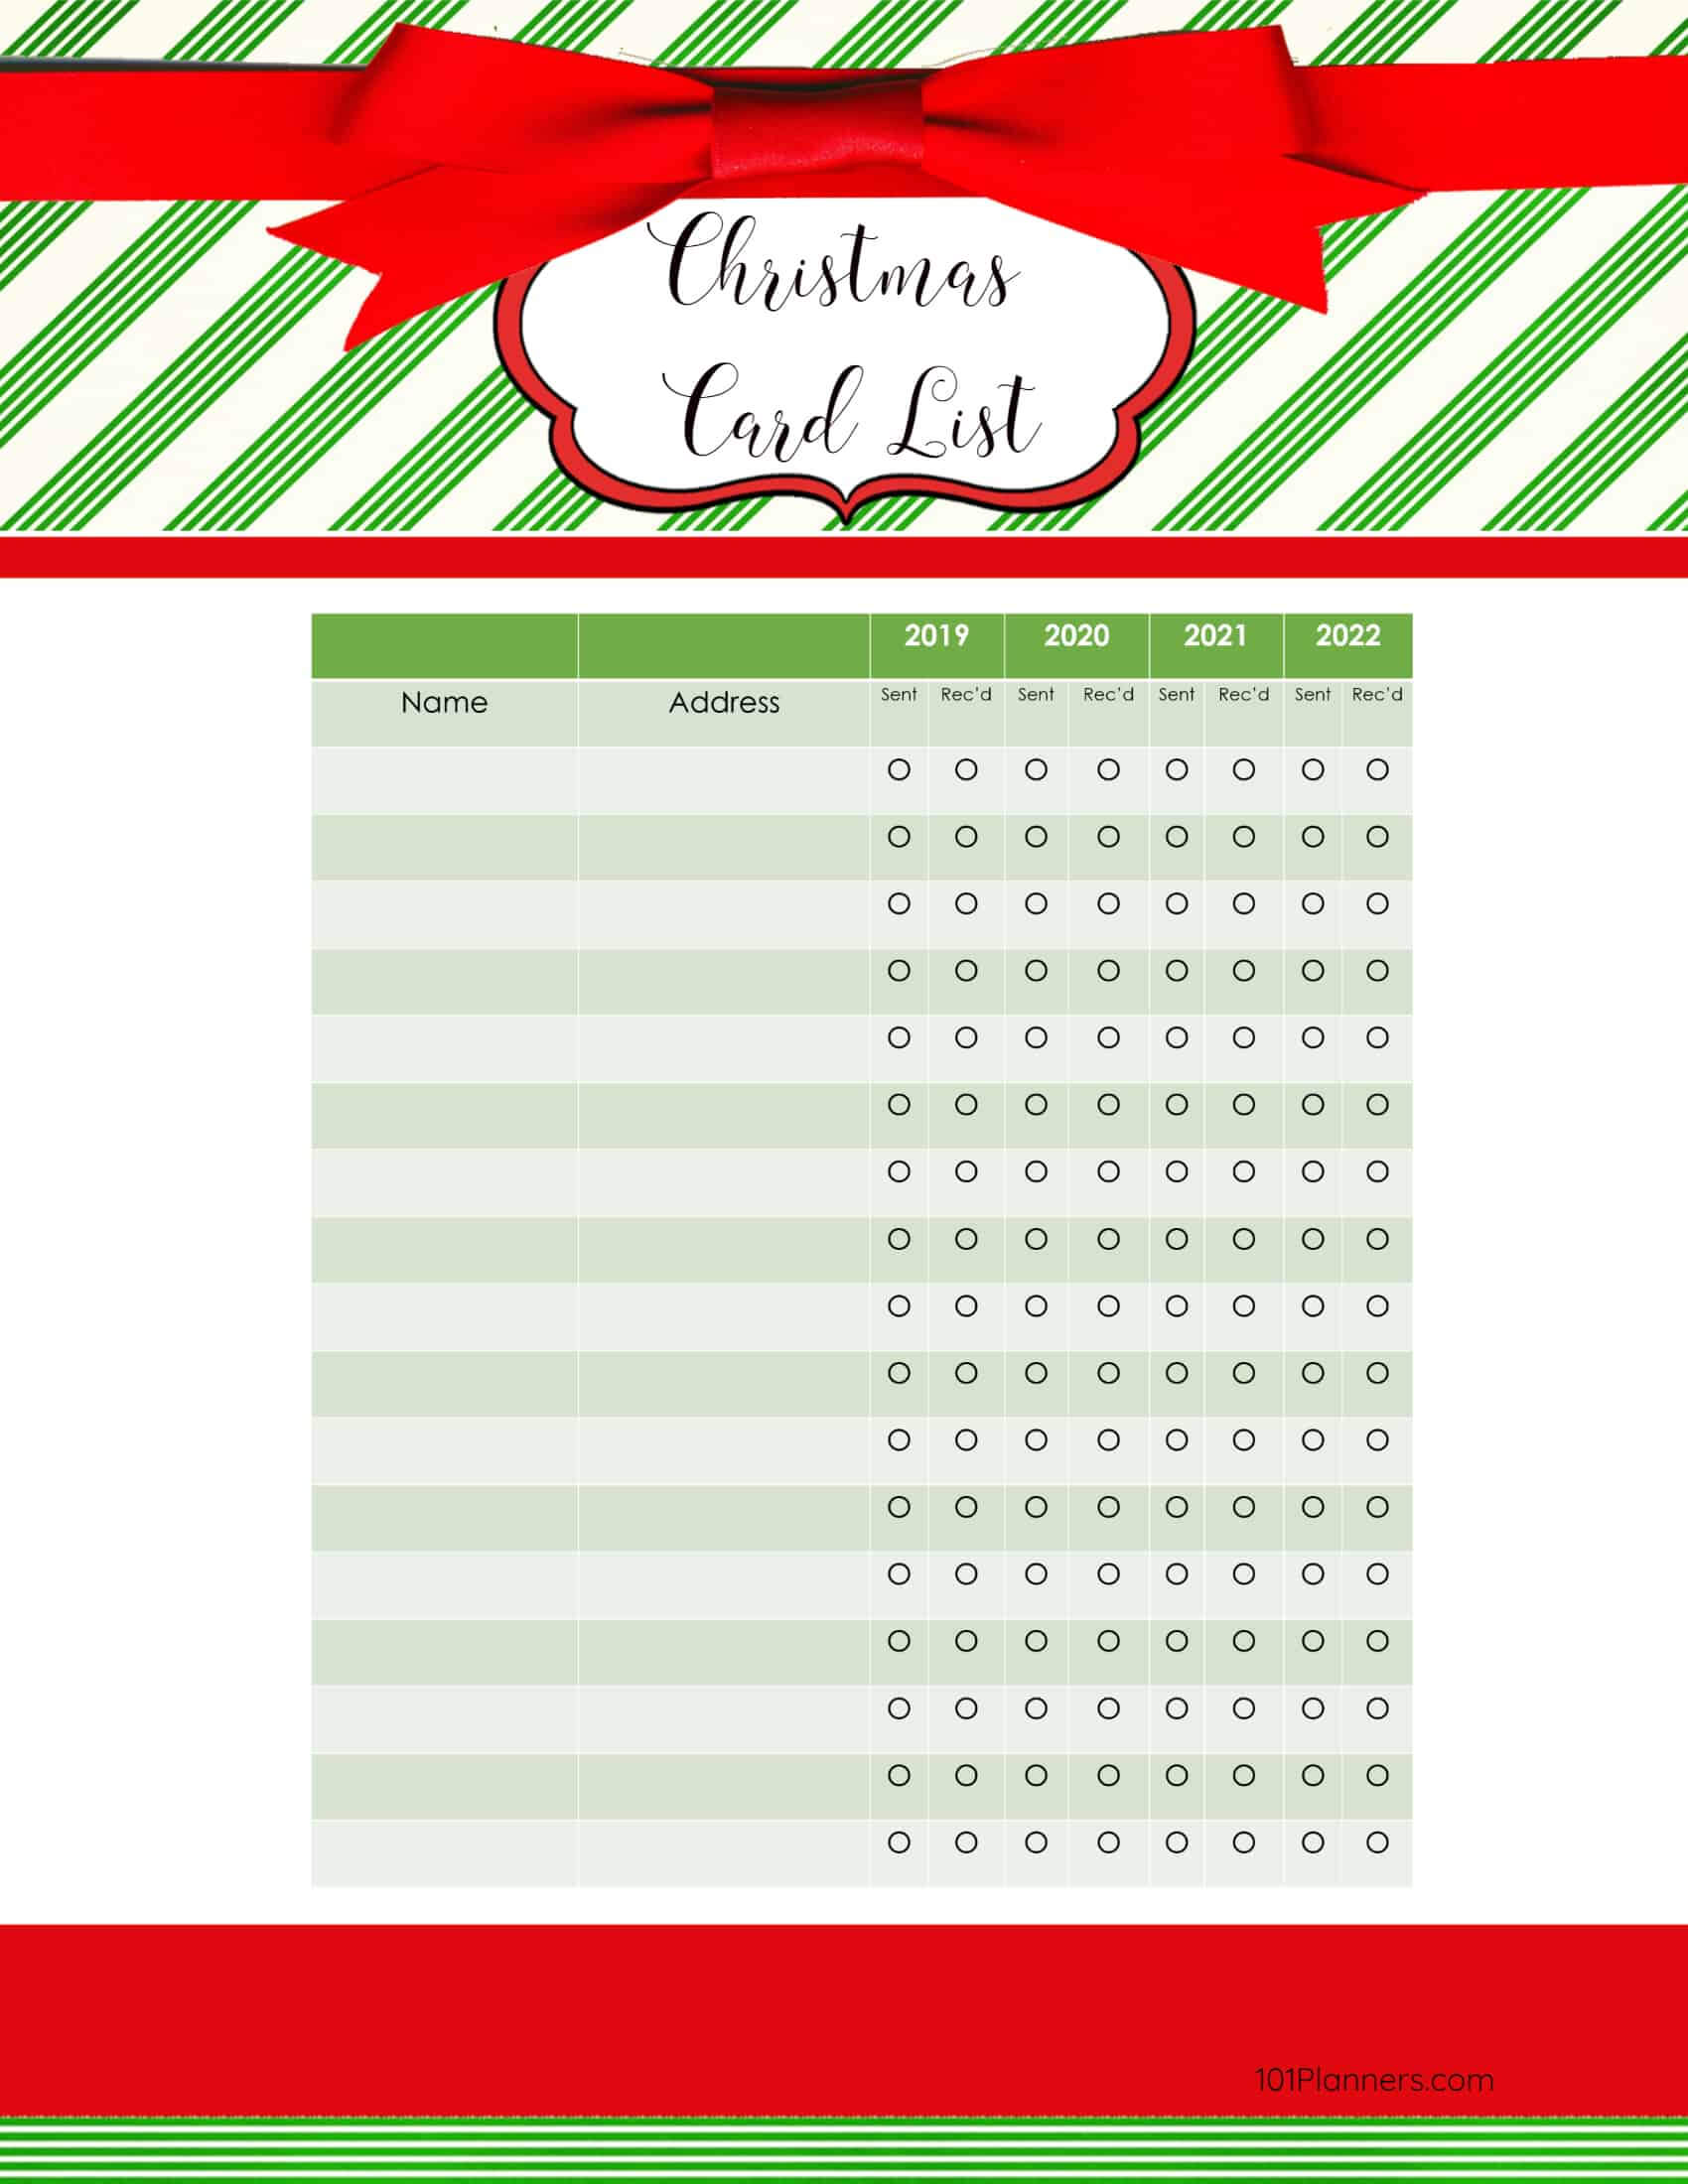 Free Printable Christmas Gift List Template Intended For Christmas Card List Template